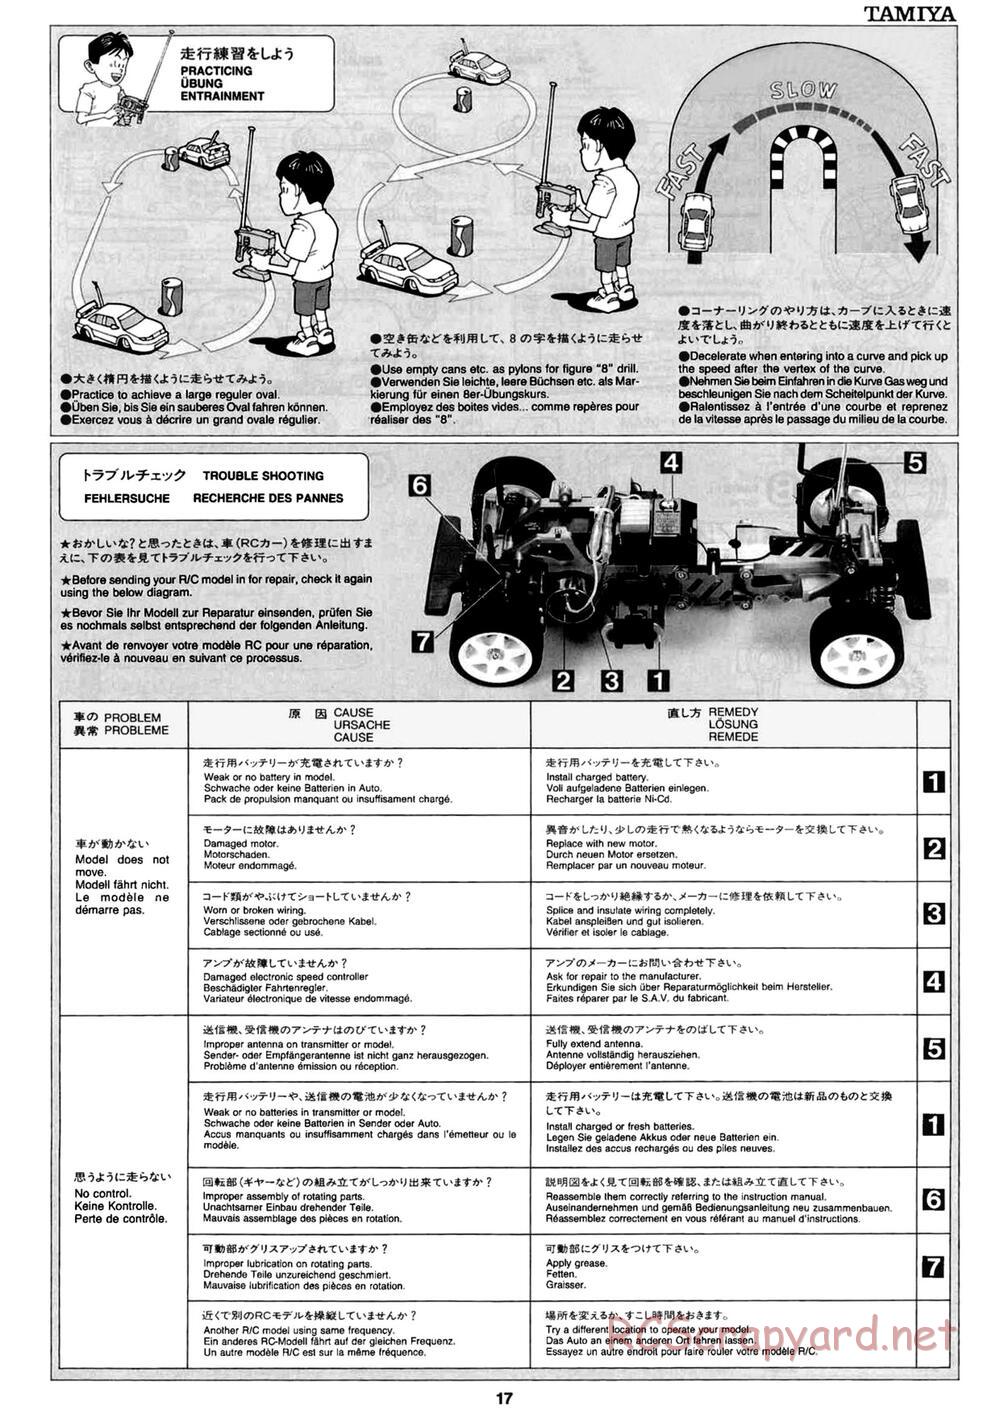 Tamiya - FF-02 Chassis - Manual - Page 13